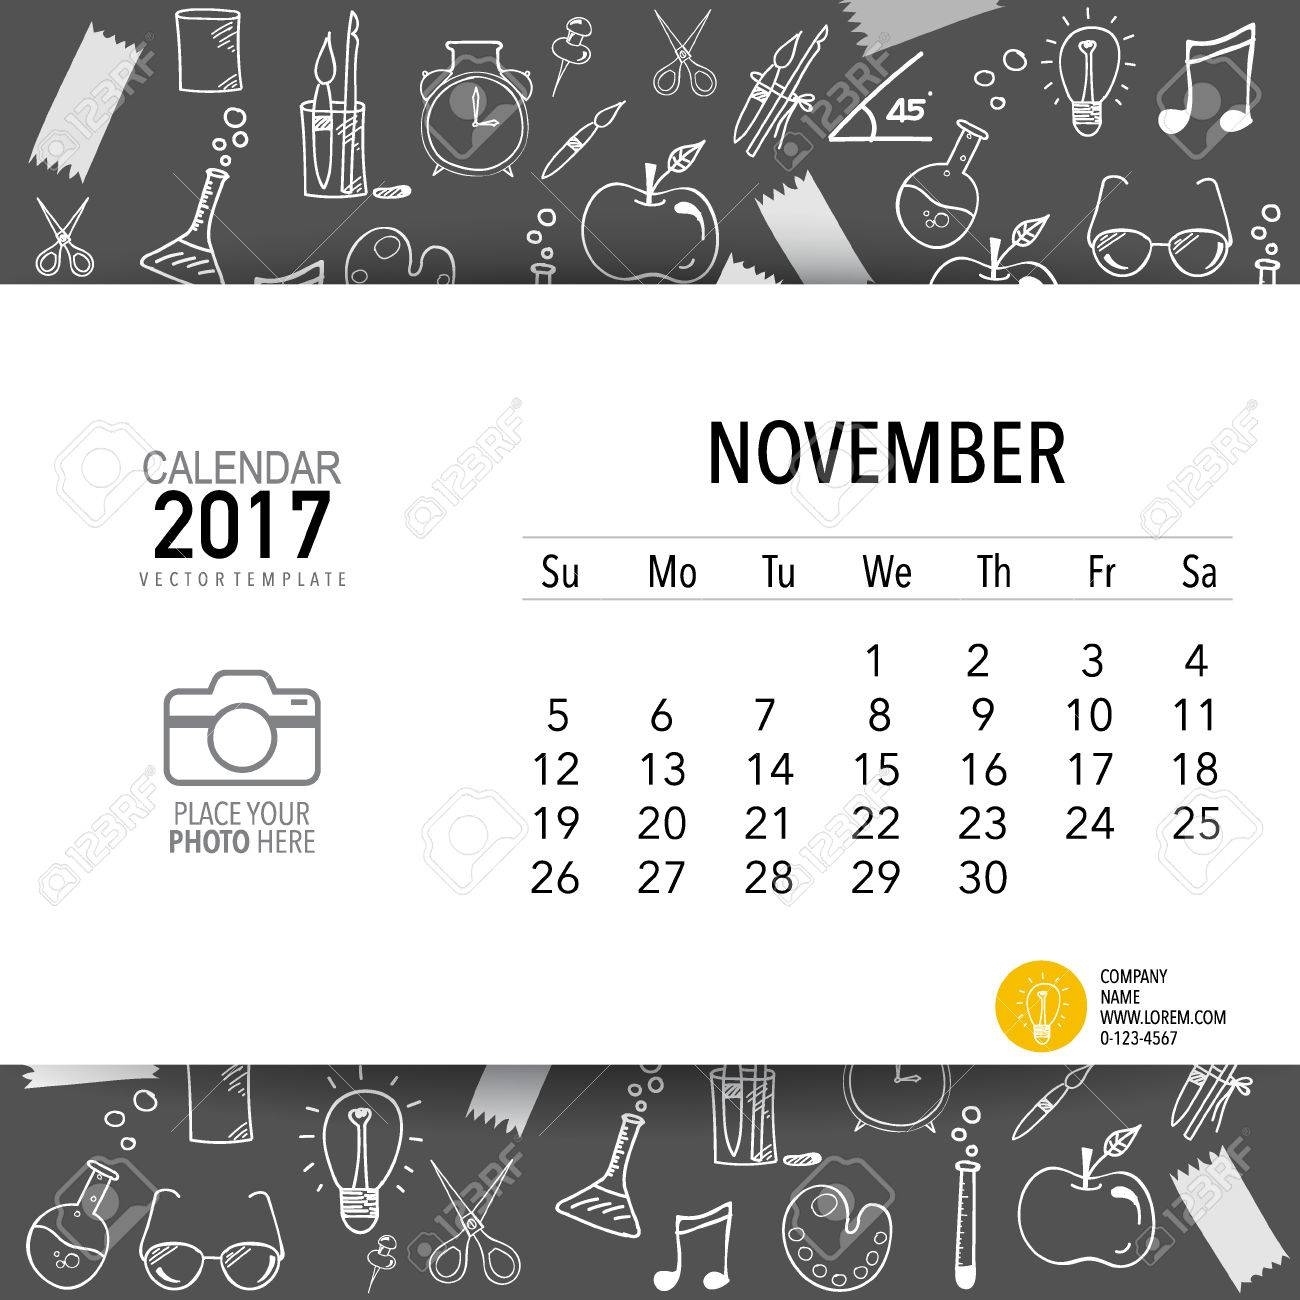 2017 Calendar Planner Design, Monthly Calendar Template For November Monthly Calendar Layout Design